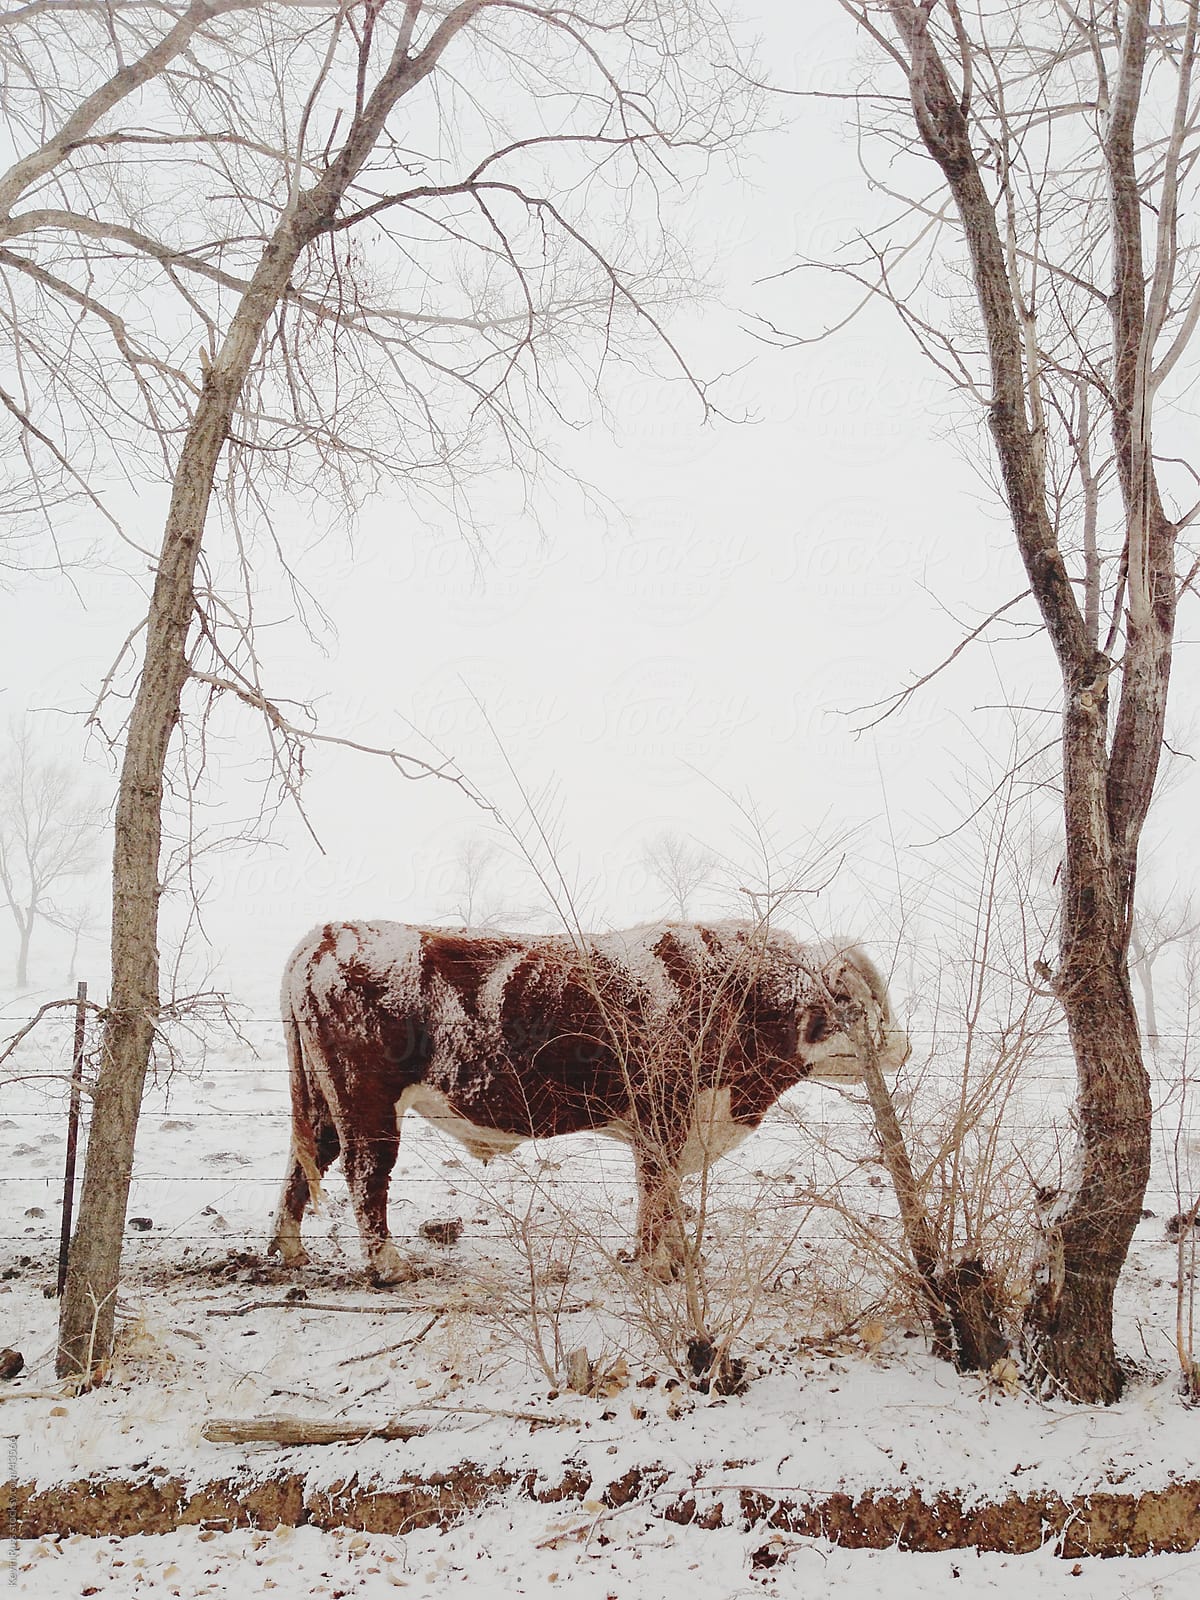 Snowy Cow In Between Trees